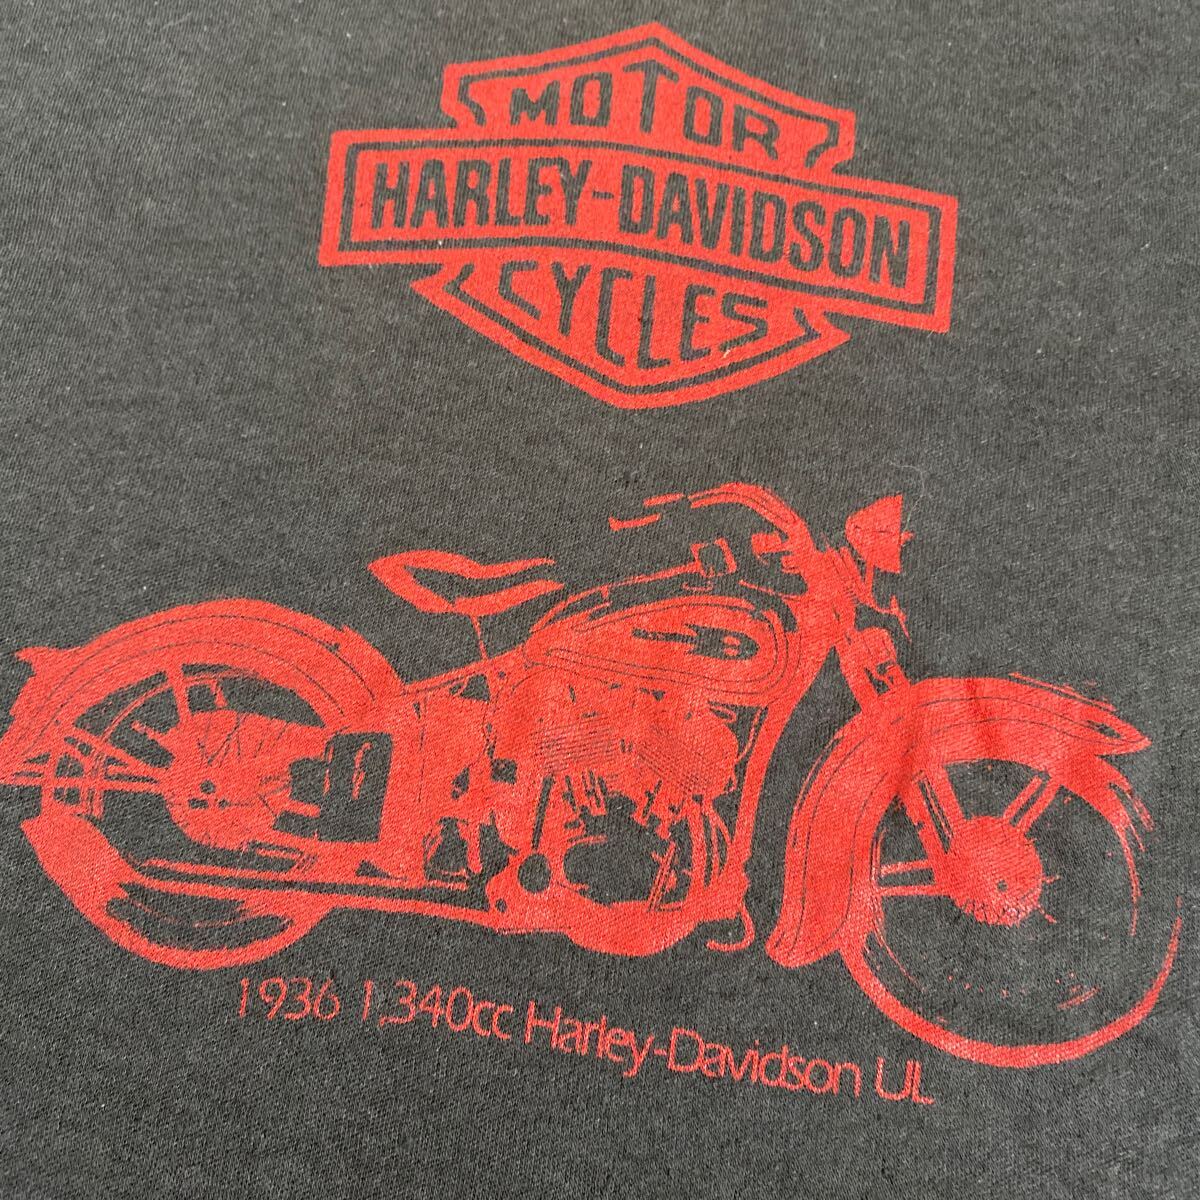 90s 00s ビンテージ 黒 ロゴ Tシャツ ハーレー ダビッドソン 1936 1,340cc Harley Davidson UL バイク プリント バックスバニー 古着_画像4